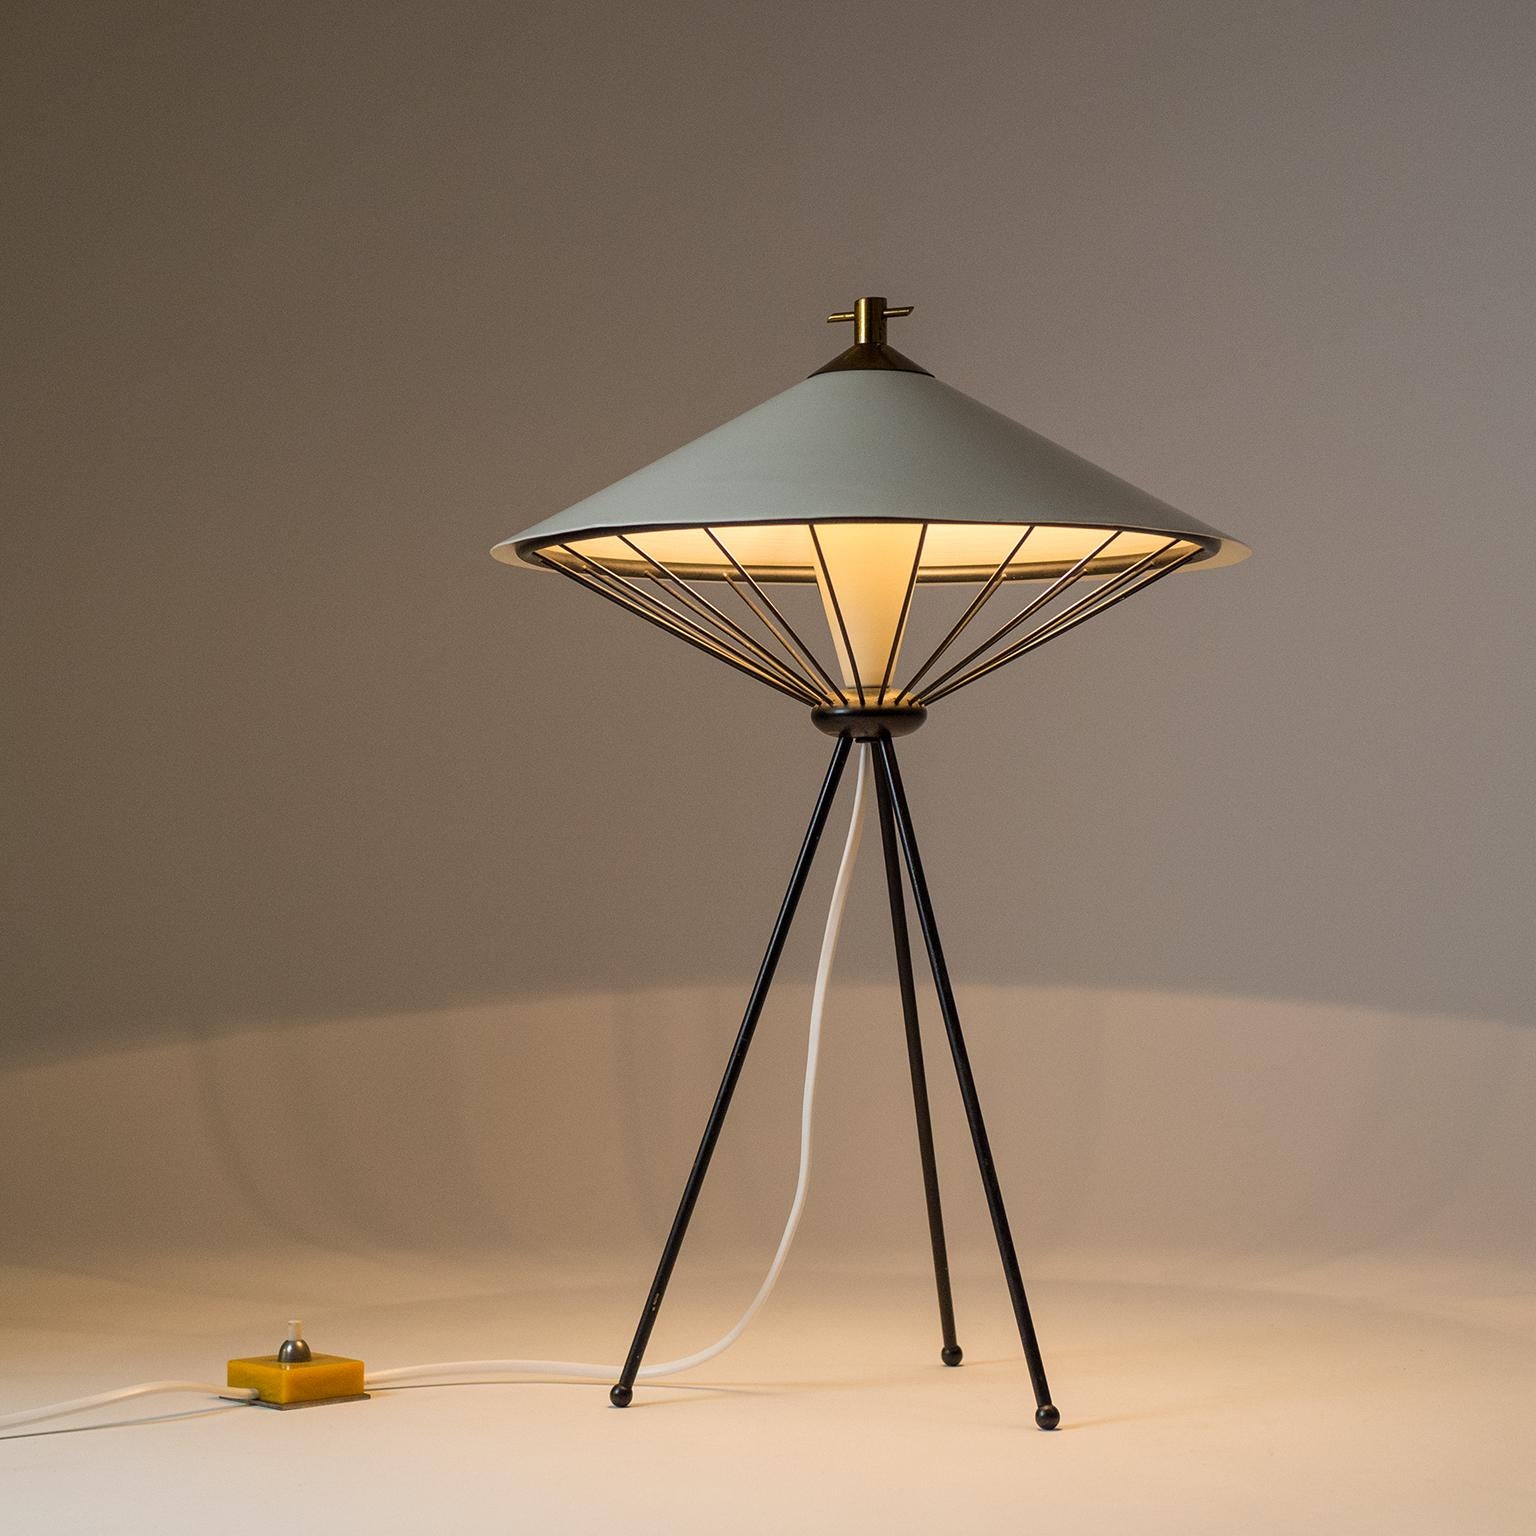 Mid-20th Century Modernist Italian Tripod Table Lamp, 1950s